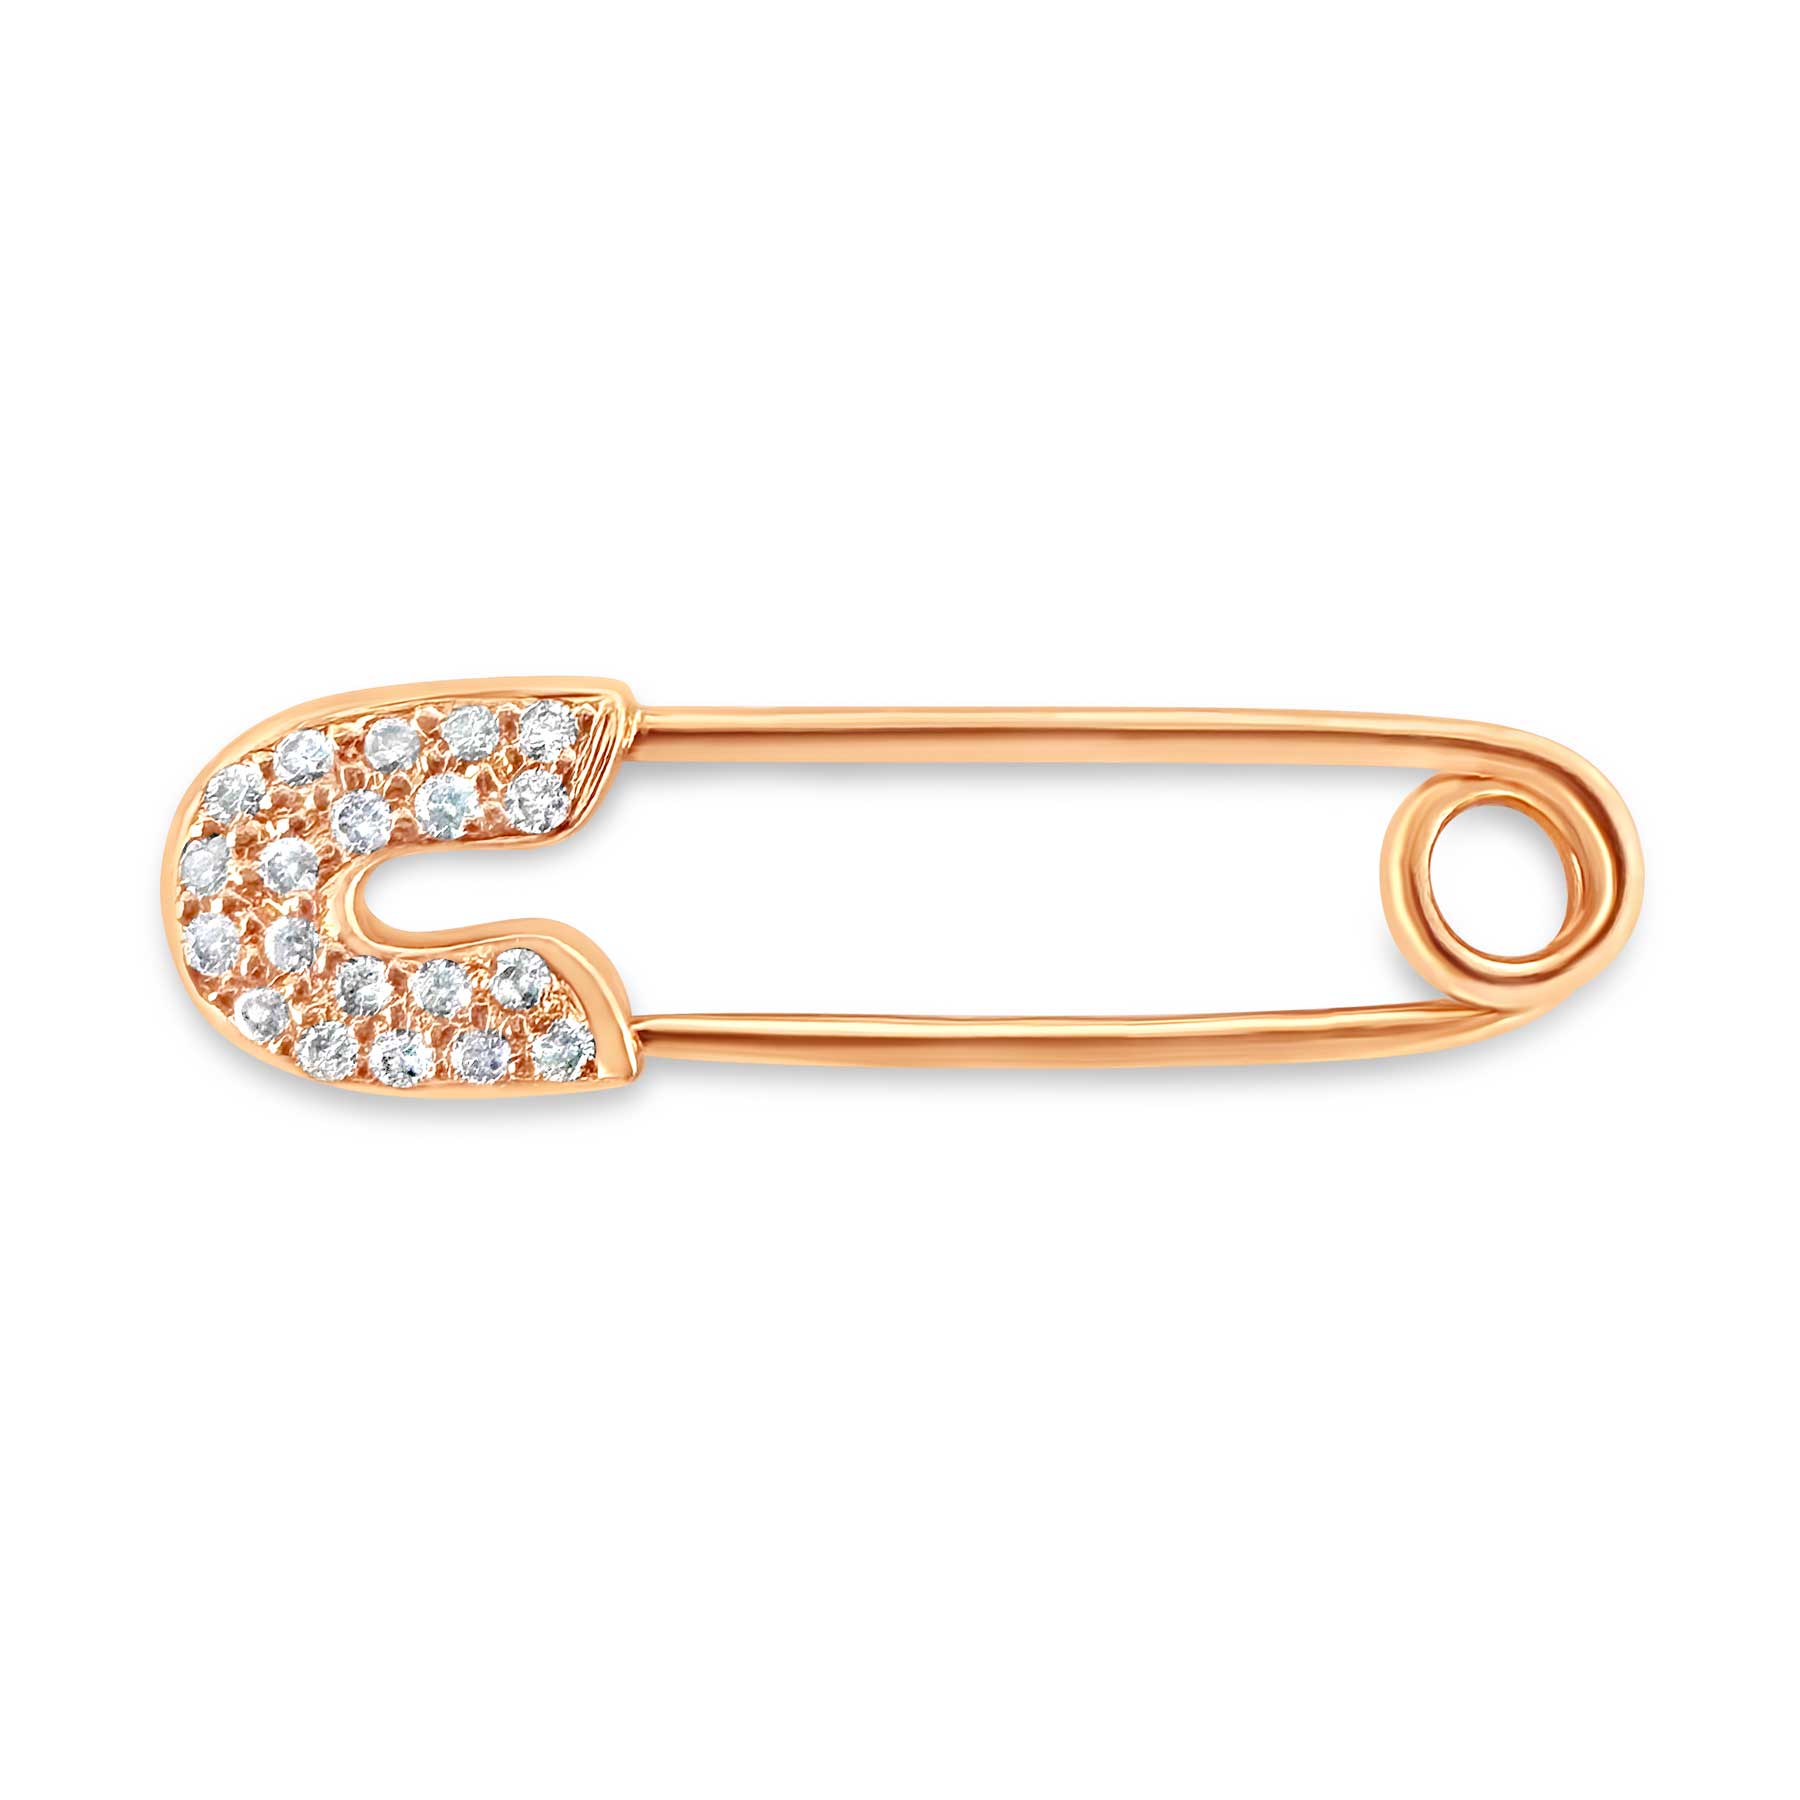 Diamond Safety Pin Brooch